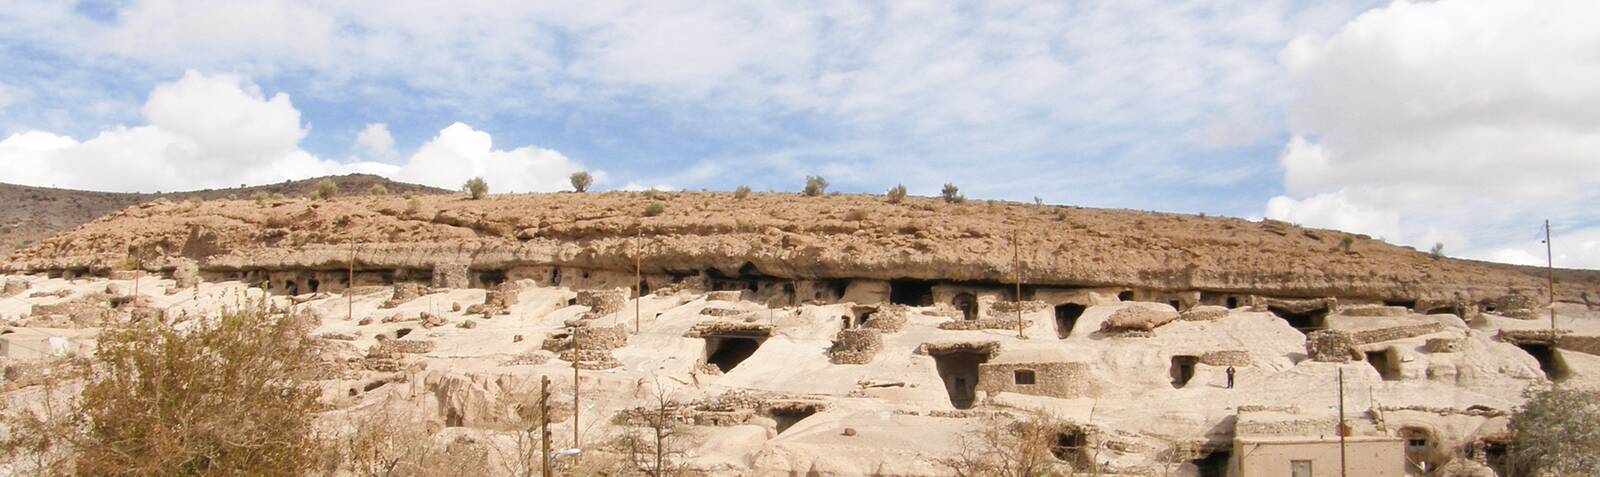 Pueblo histórico de Meymand